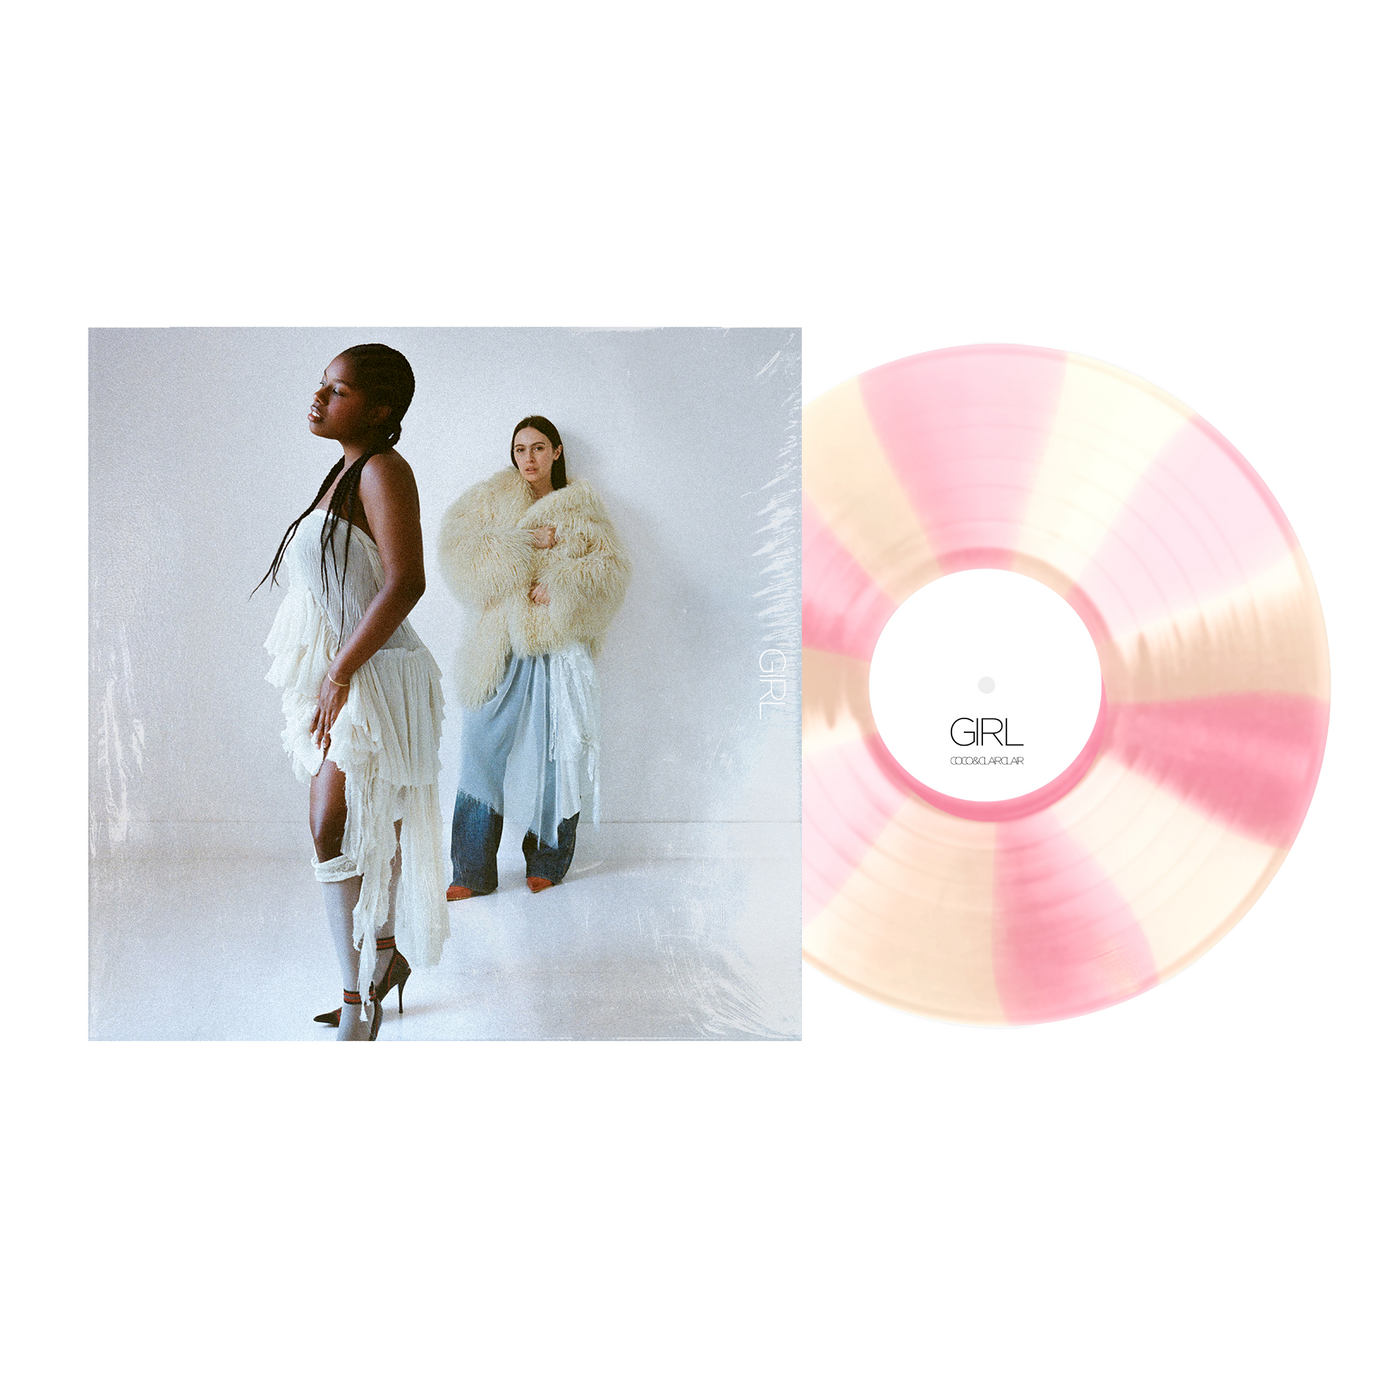 GIRL Vinyl - White and Pink Cornetto